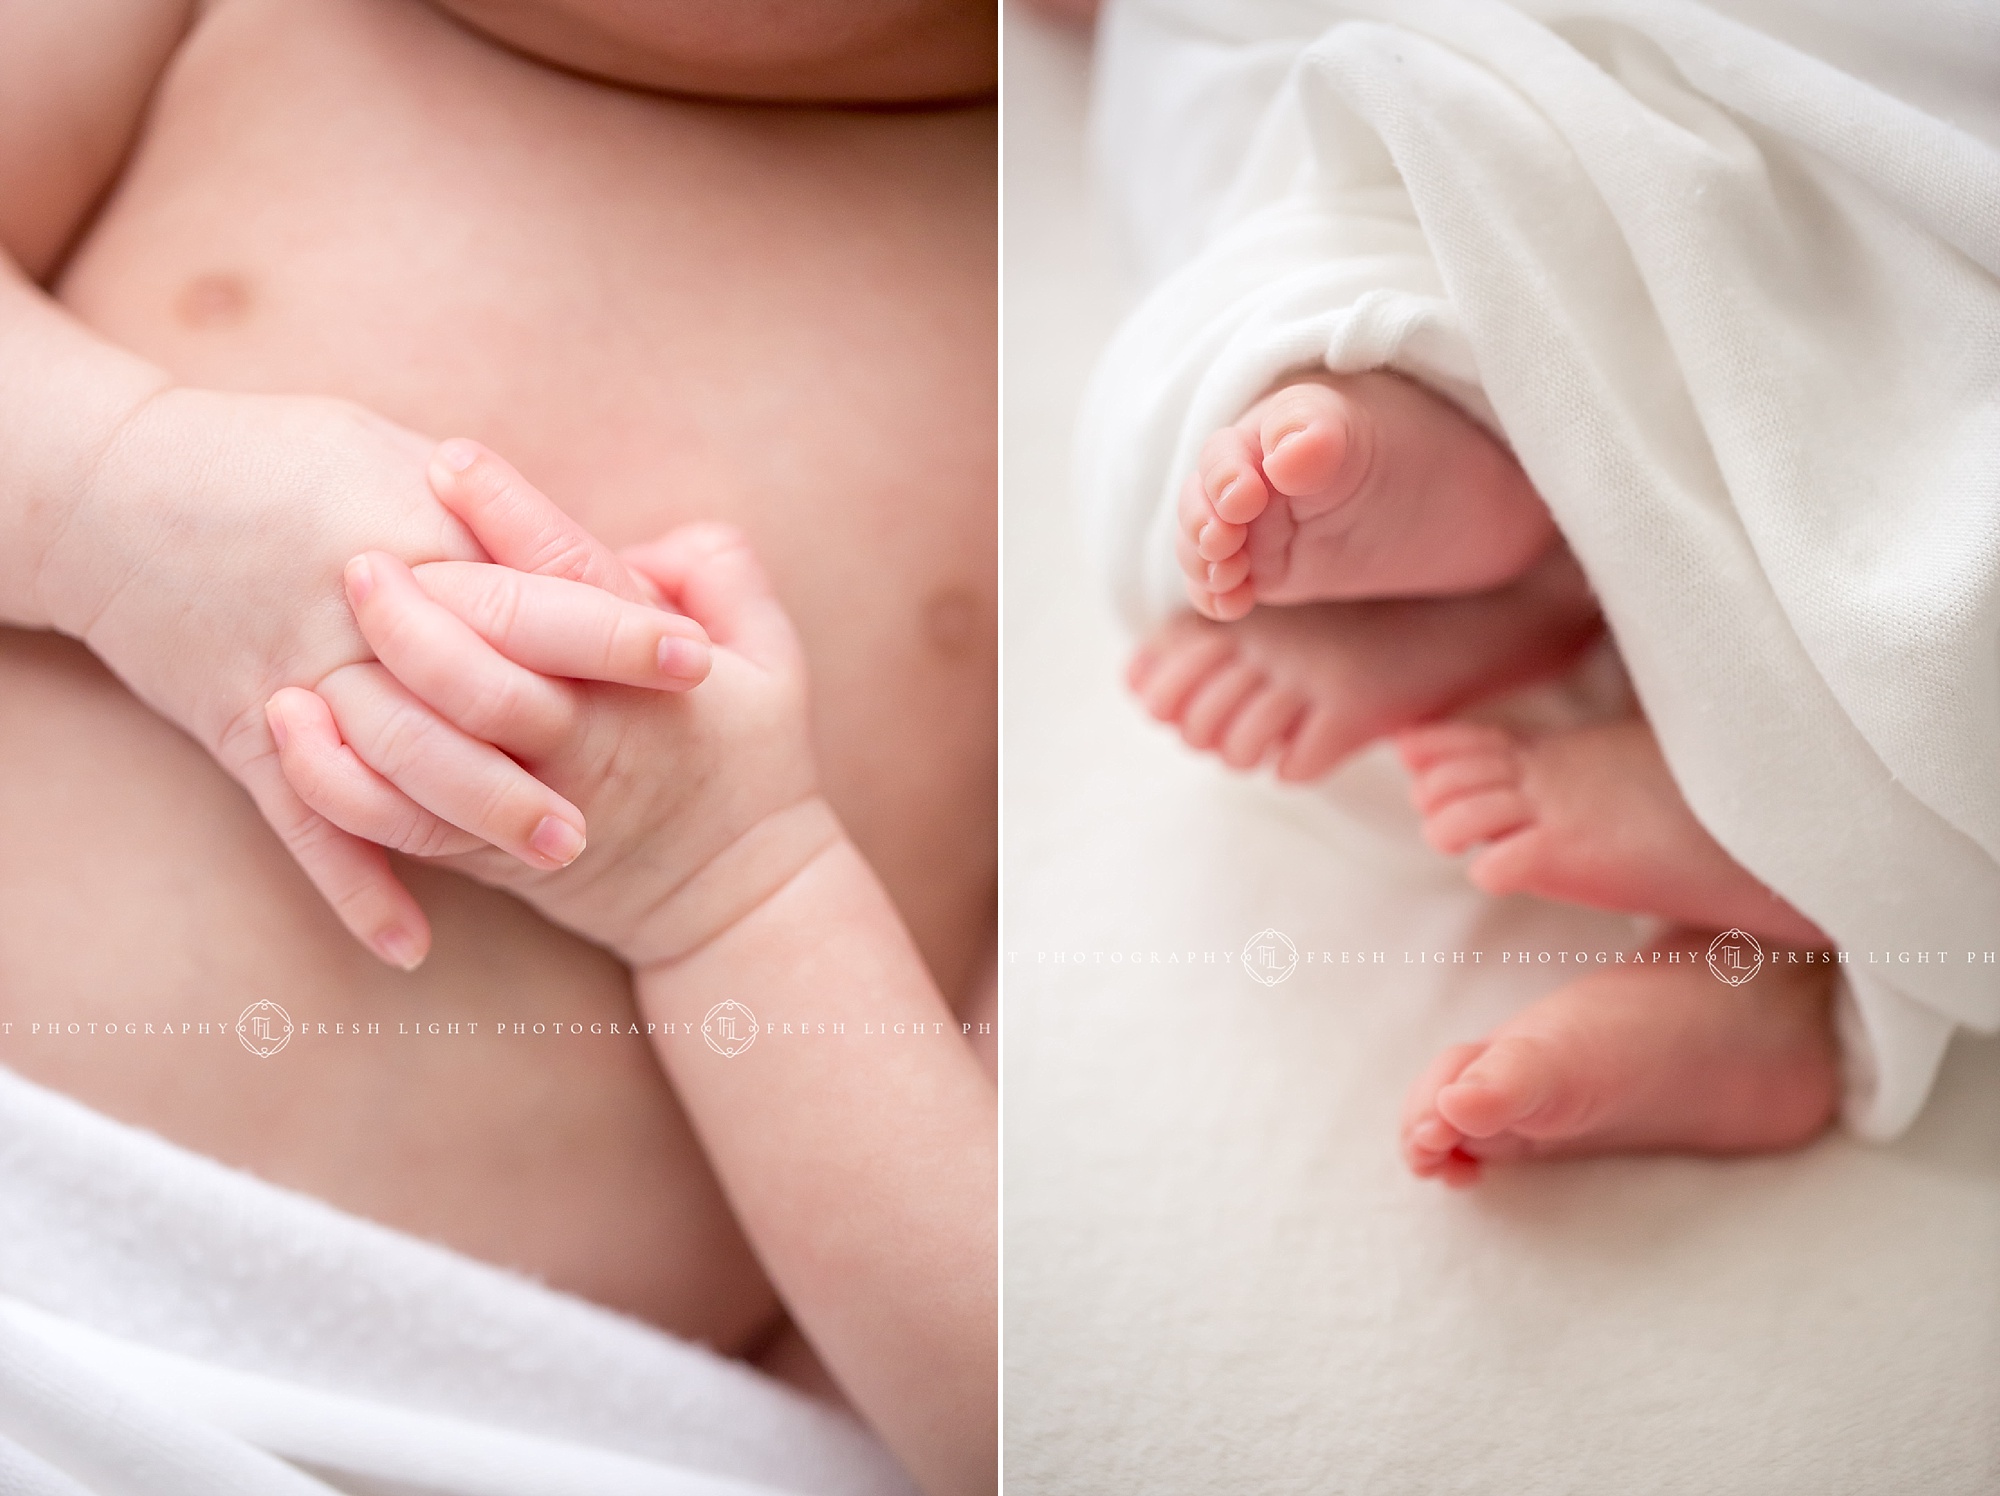 Newborn Twins hands and feet in Studio Portraits